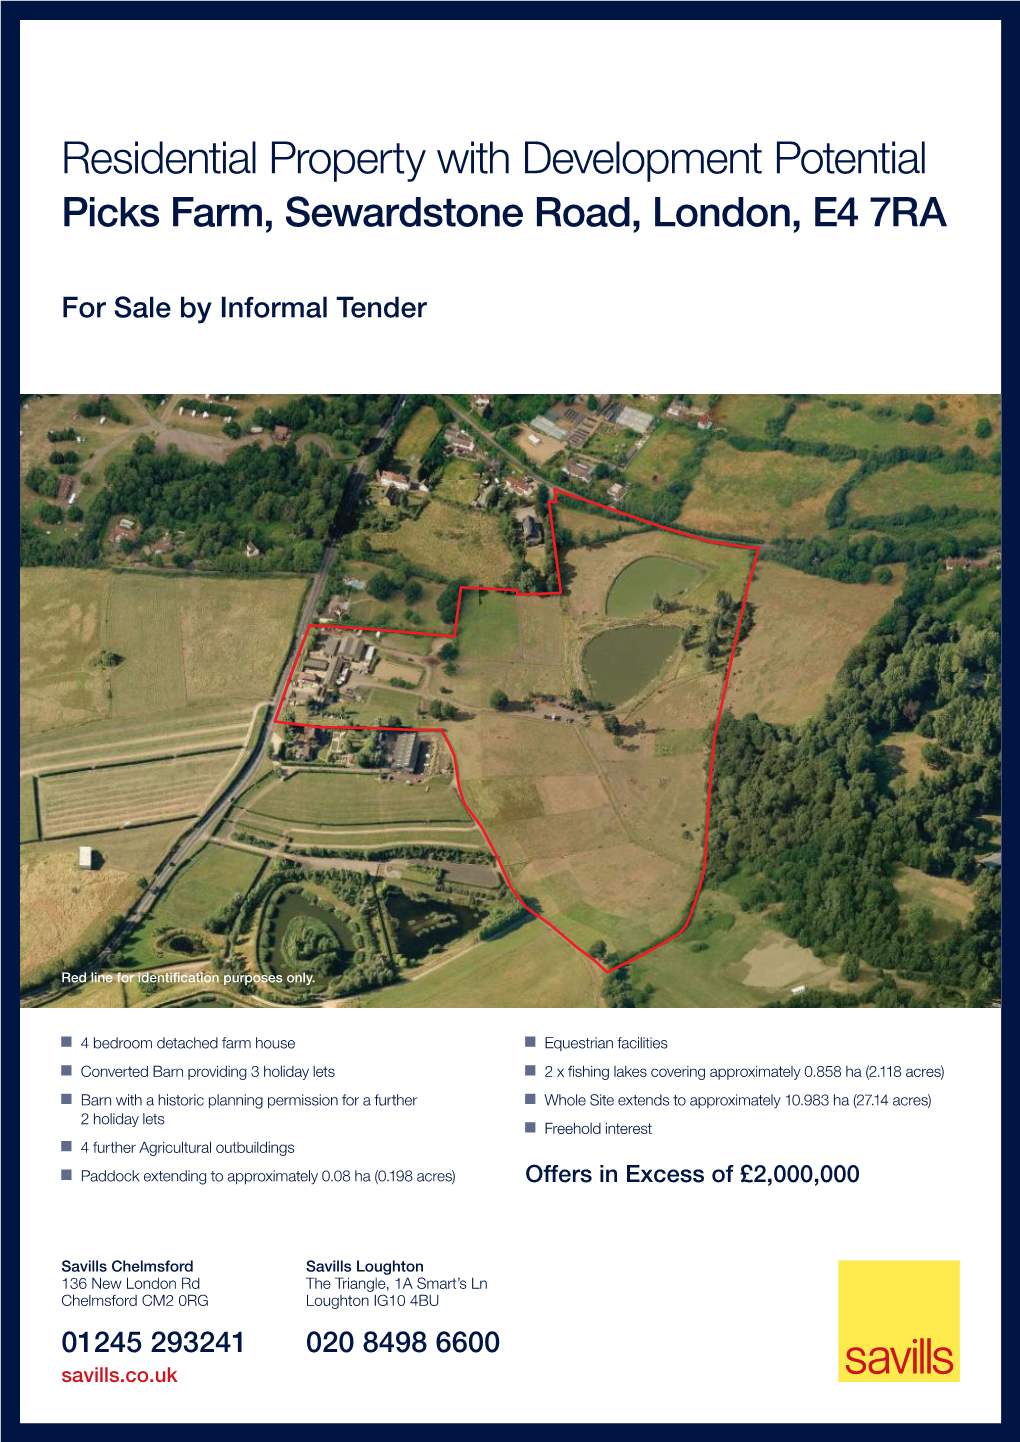 Residential Property with Development Potential Picks Farm, Sewardstone Road, London, E4 7RA